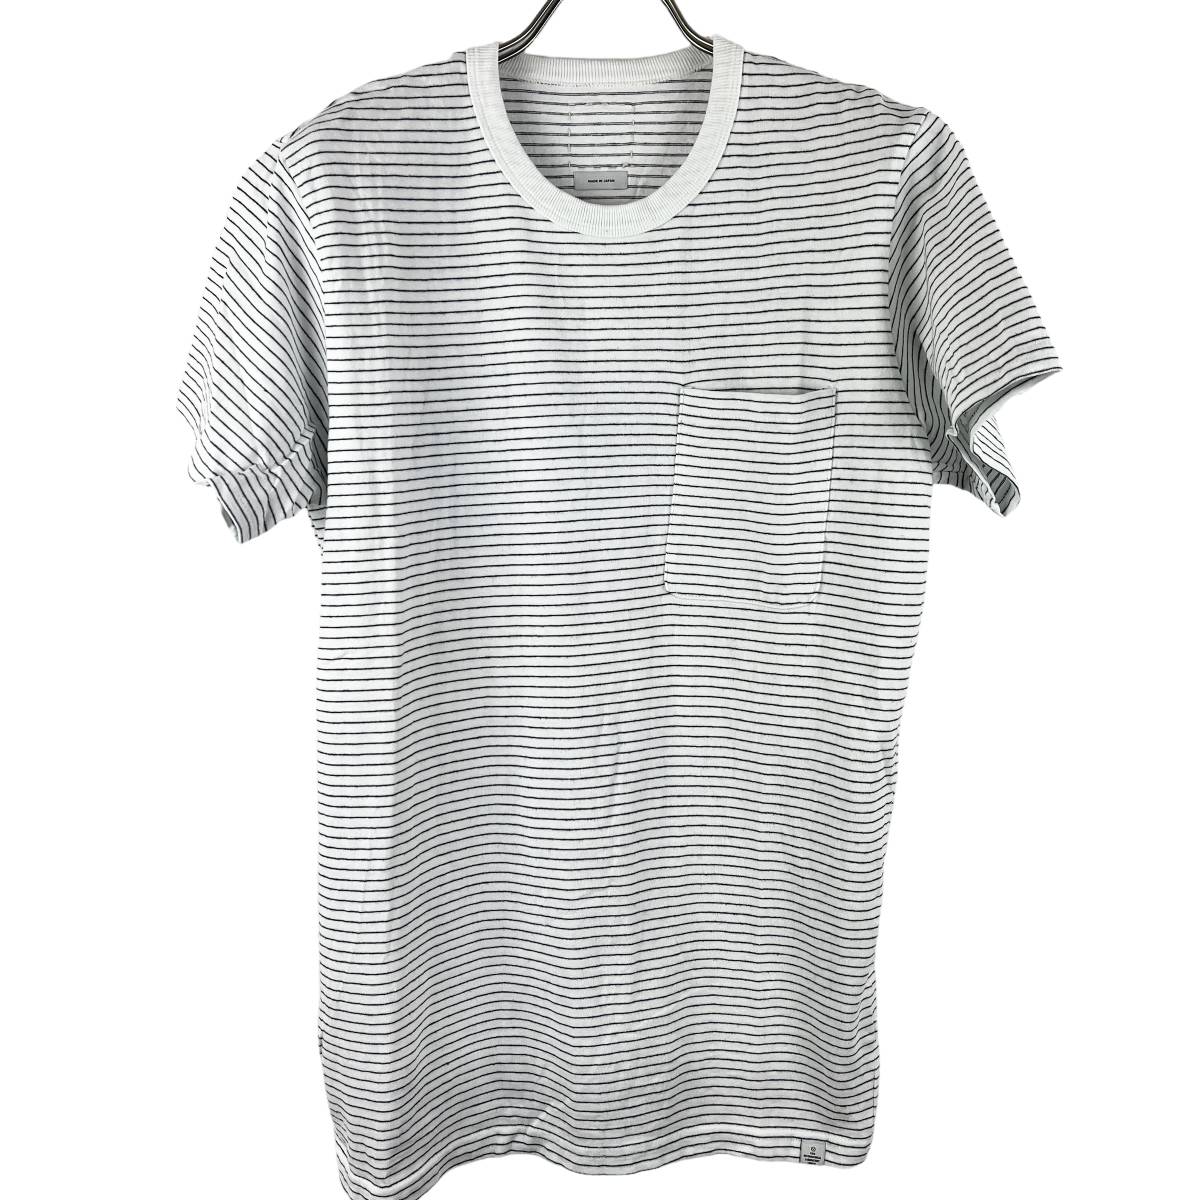 VISVIM(ビズビム) Stripe Fitting Cotton T Shirt (white)